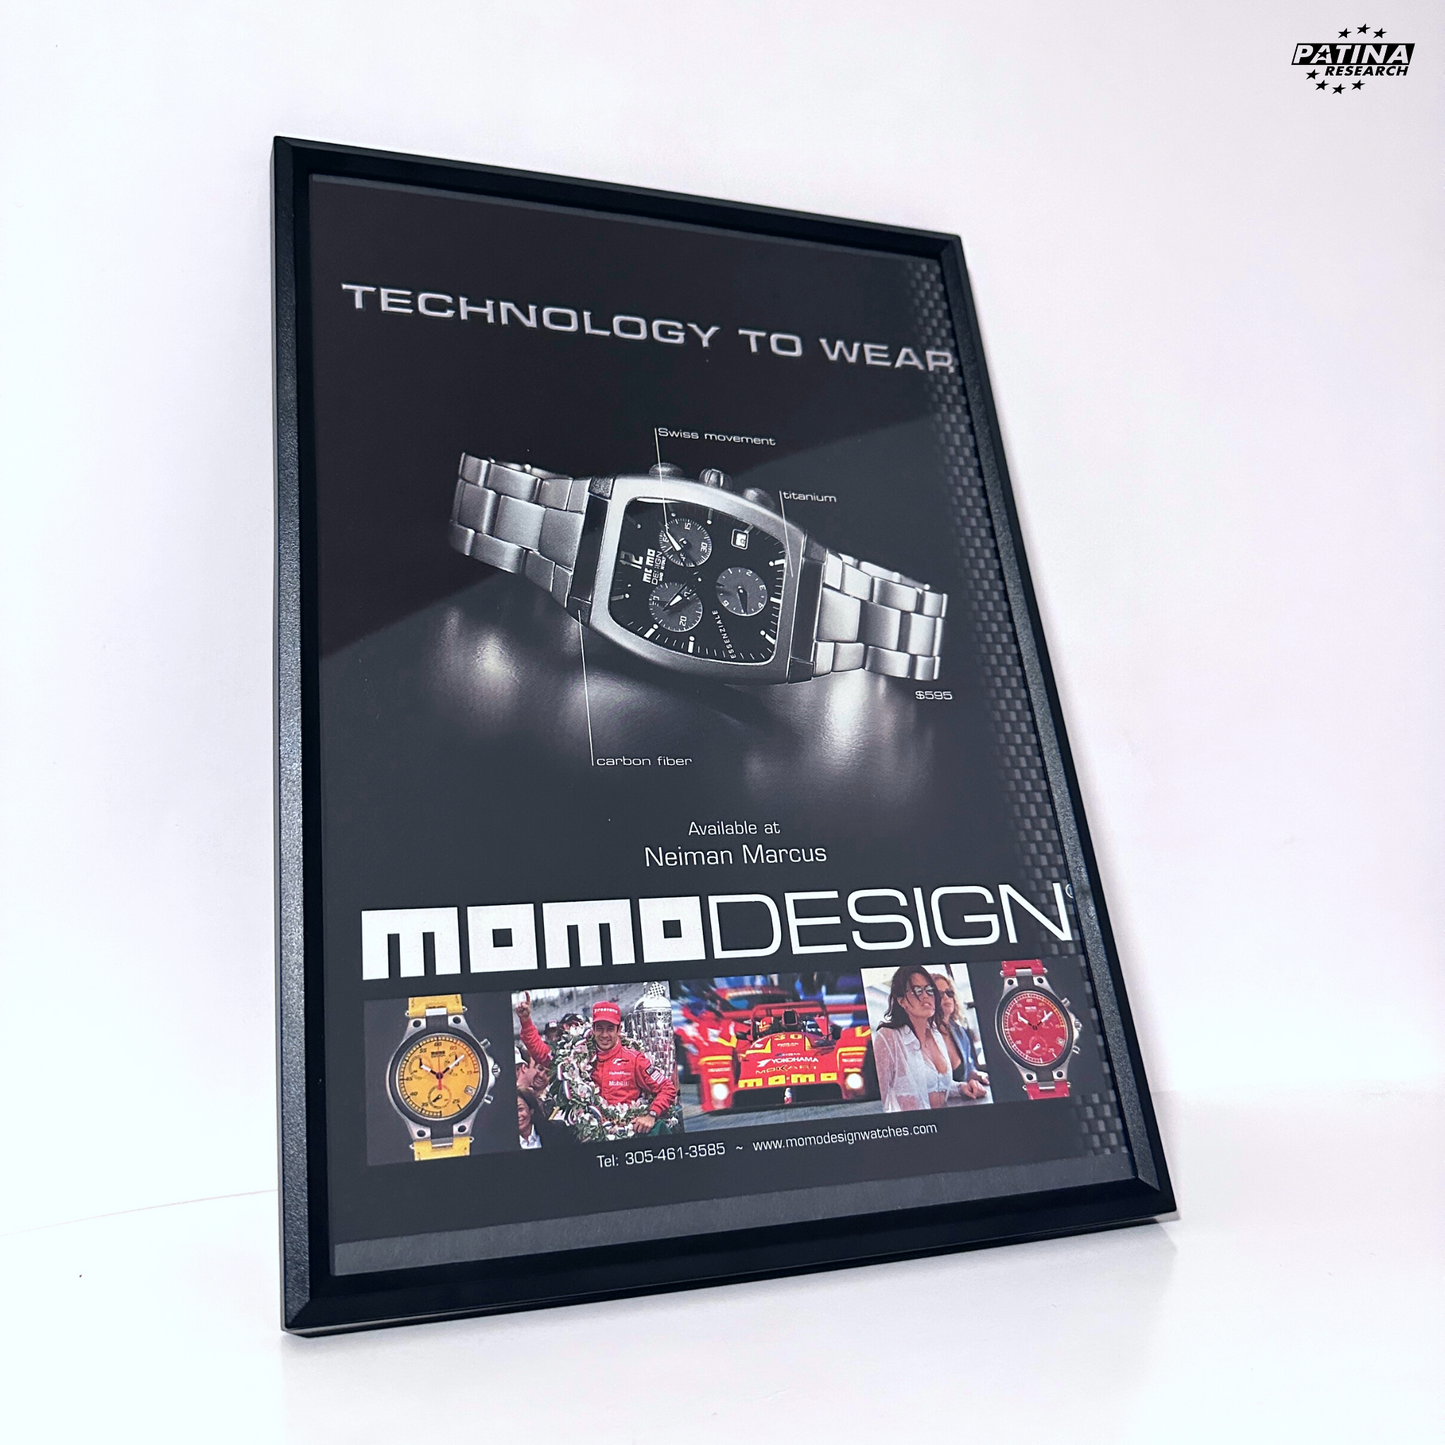 momo design technology to wear framed ad